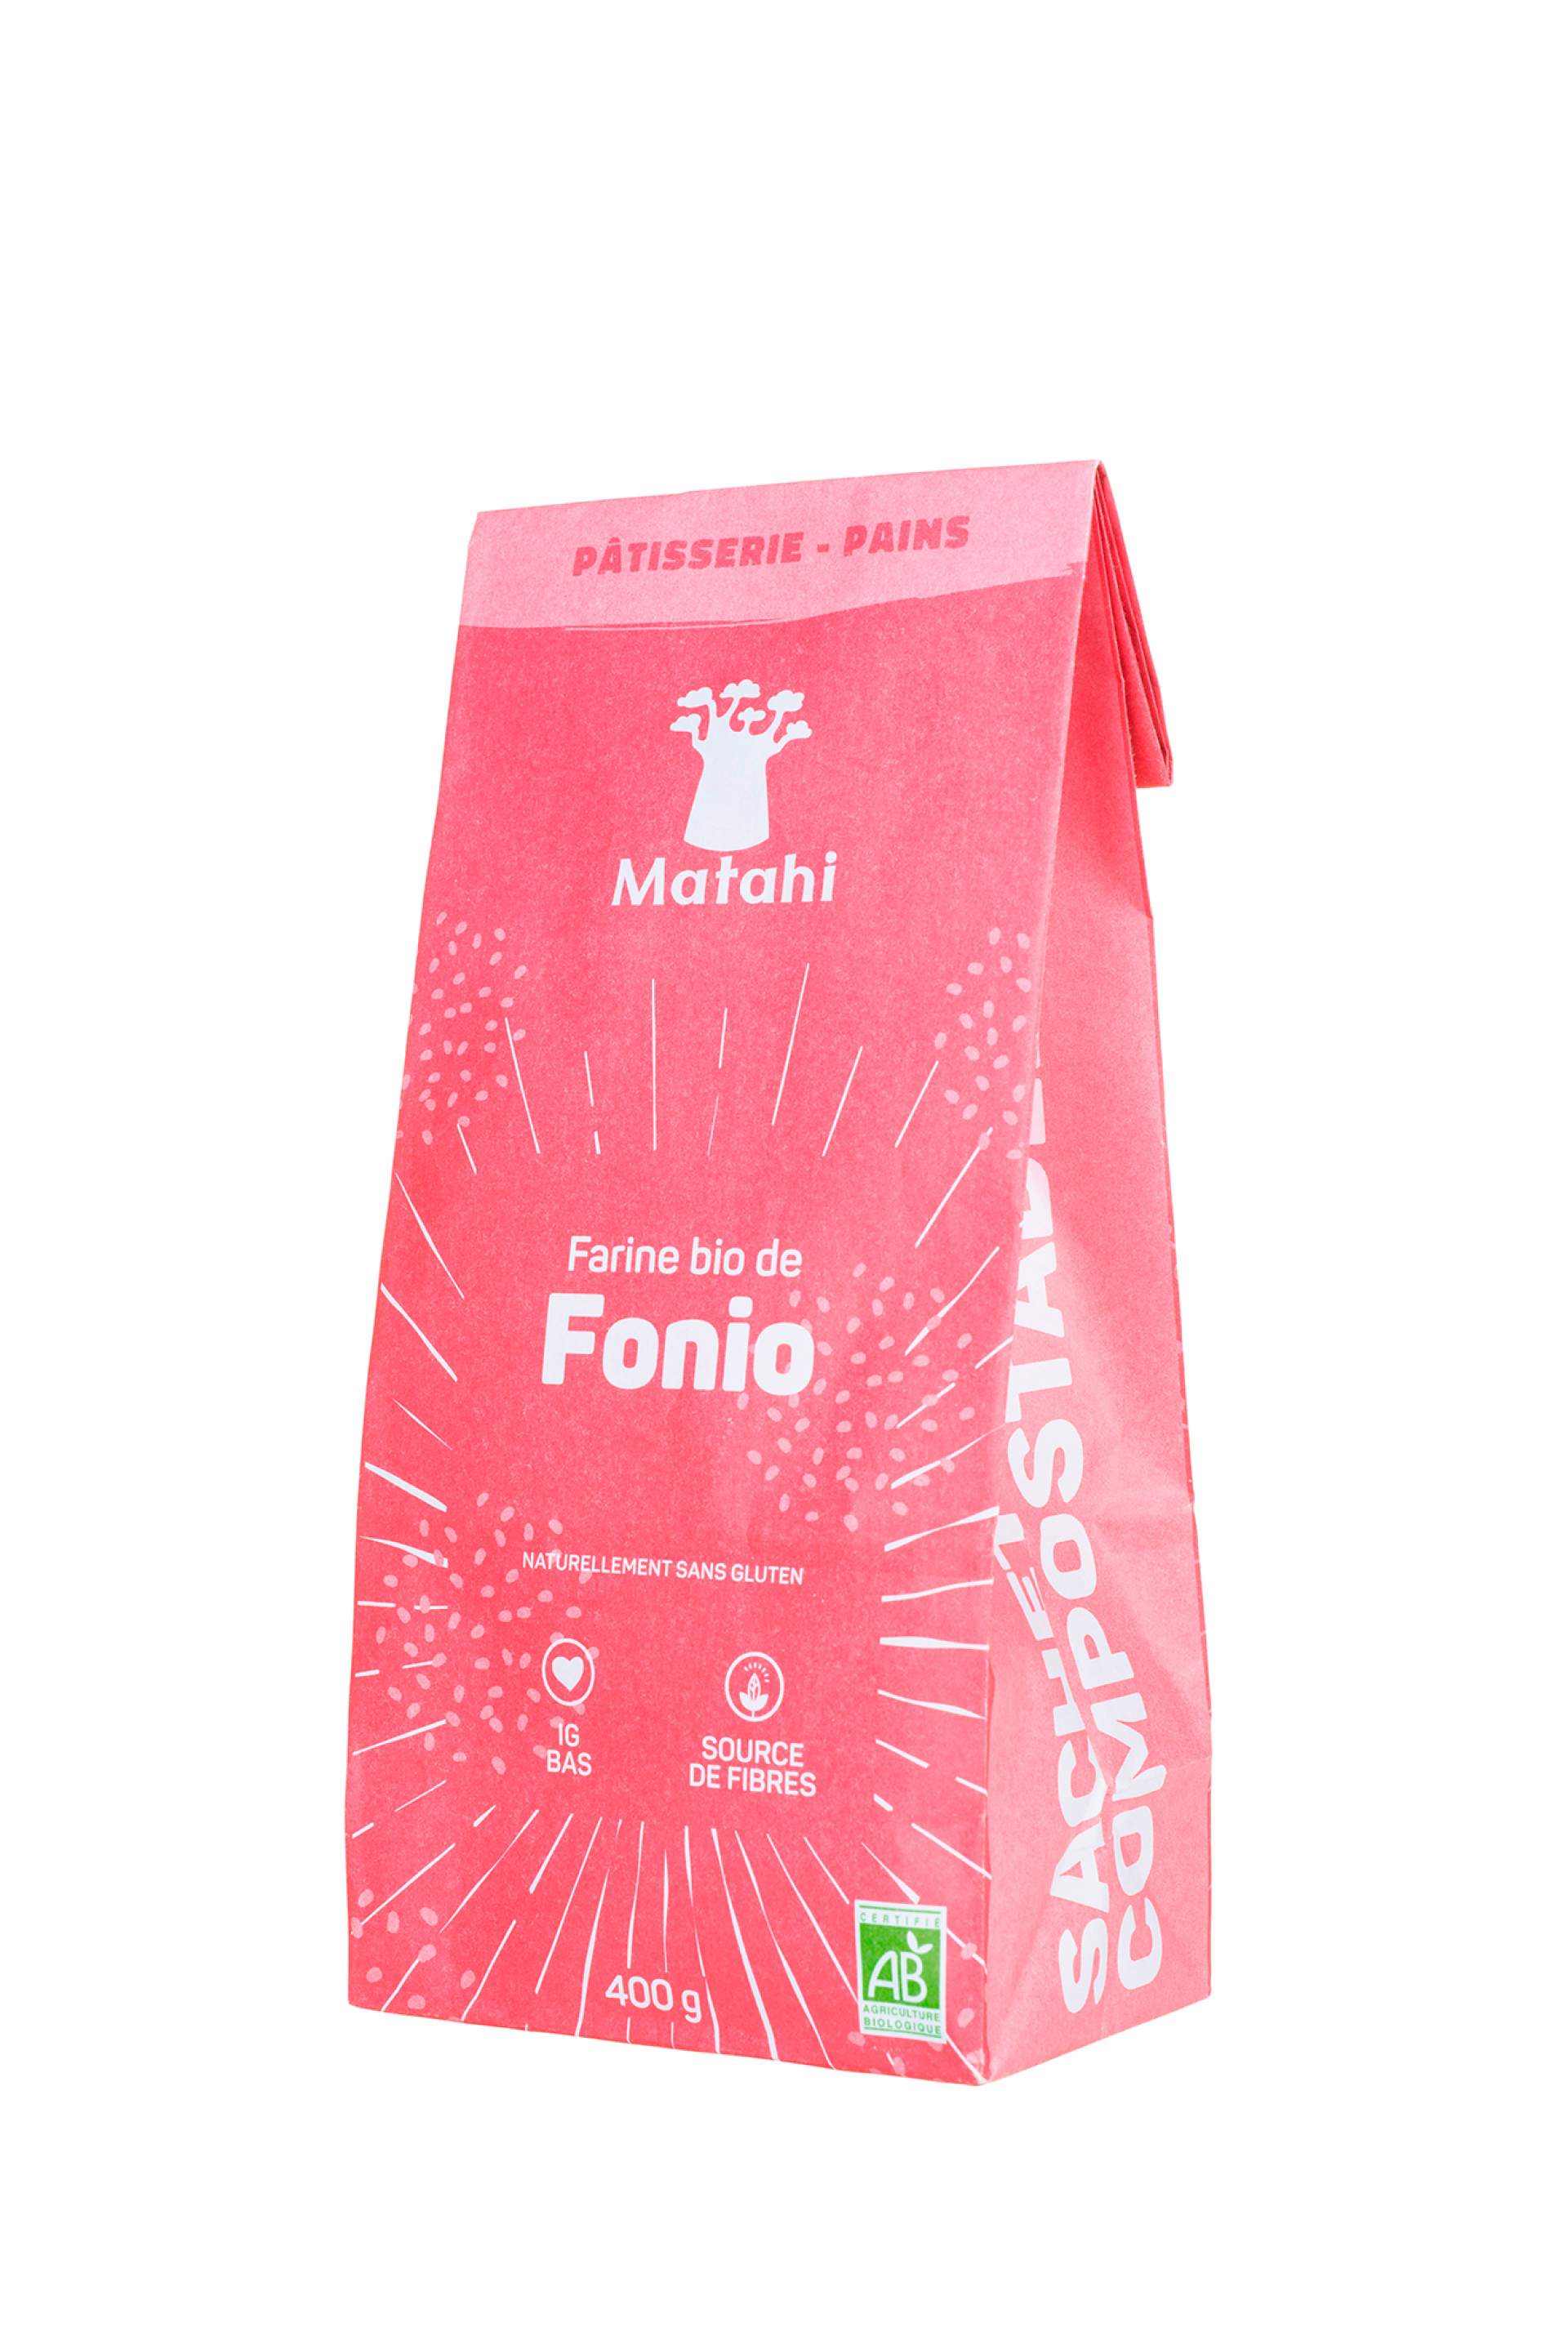 Création du packaging de la farine fonio